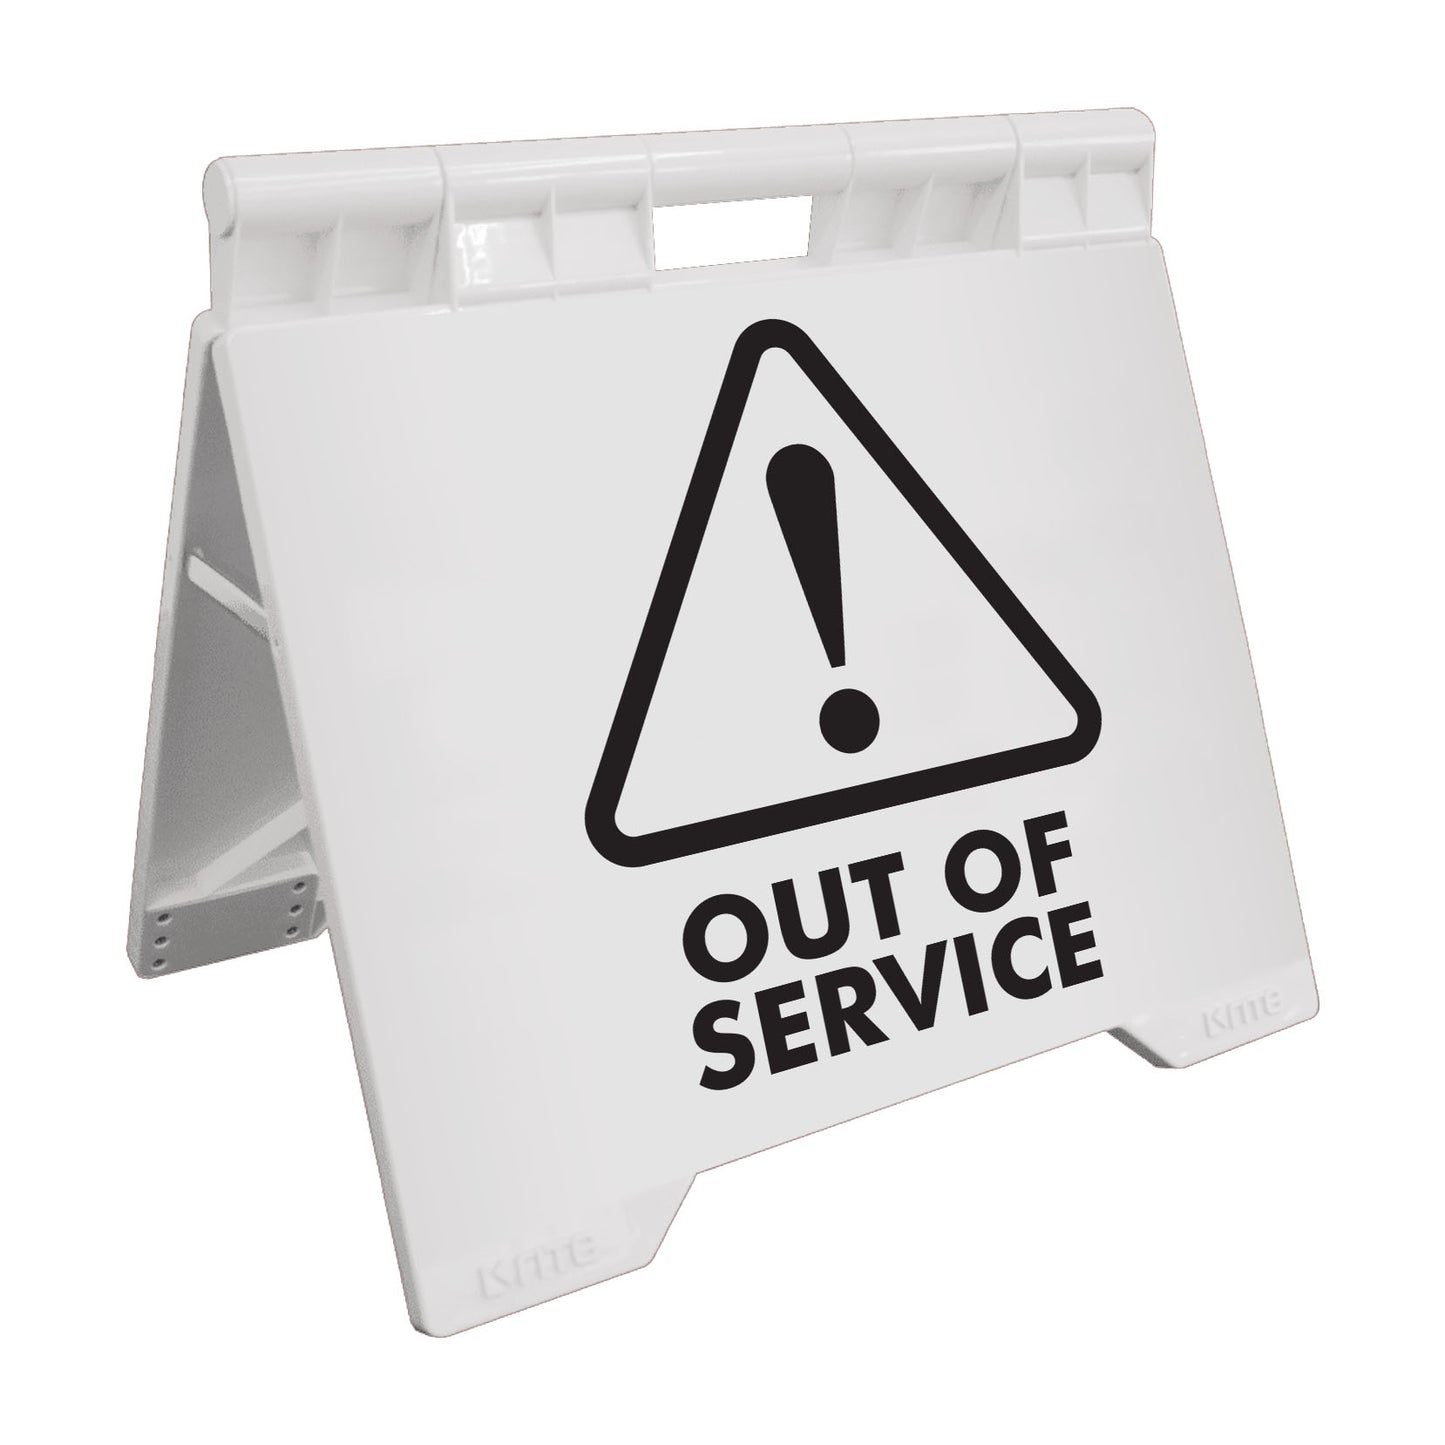 Out Of Service - Evarite A-Frame Sign